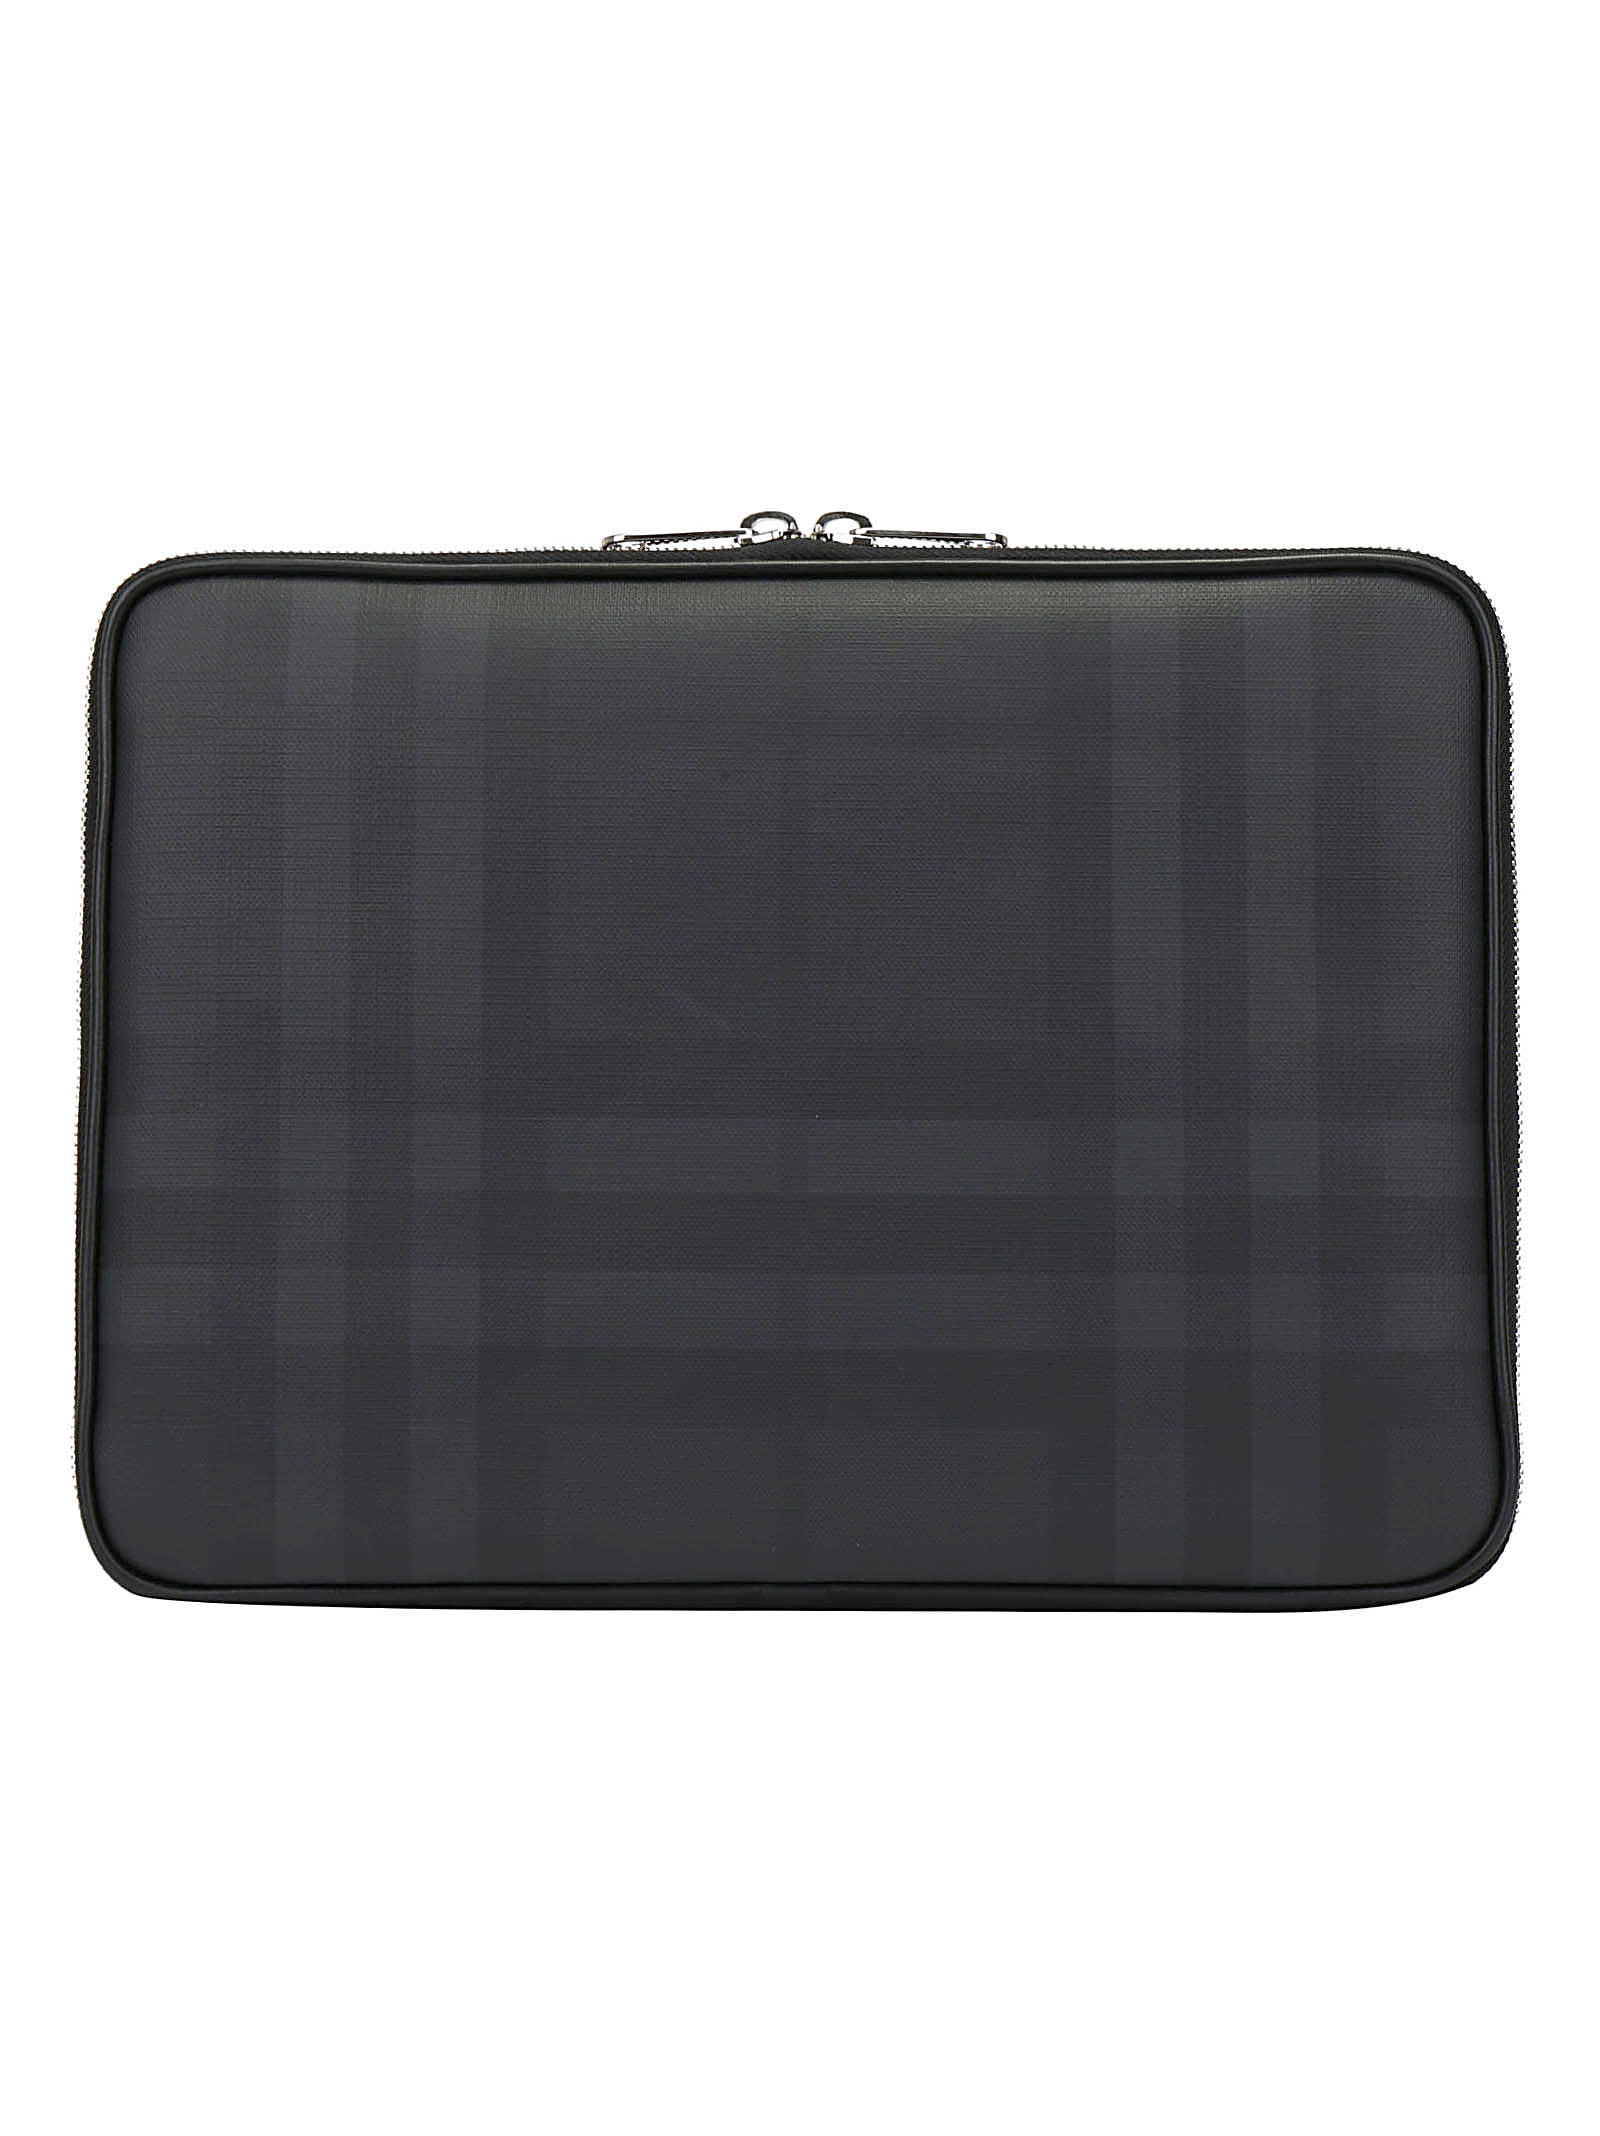 Burberry Laptop Case - Dark charcoal 